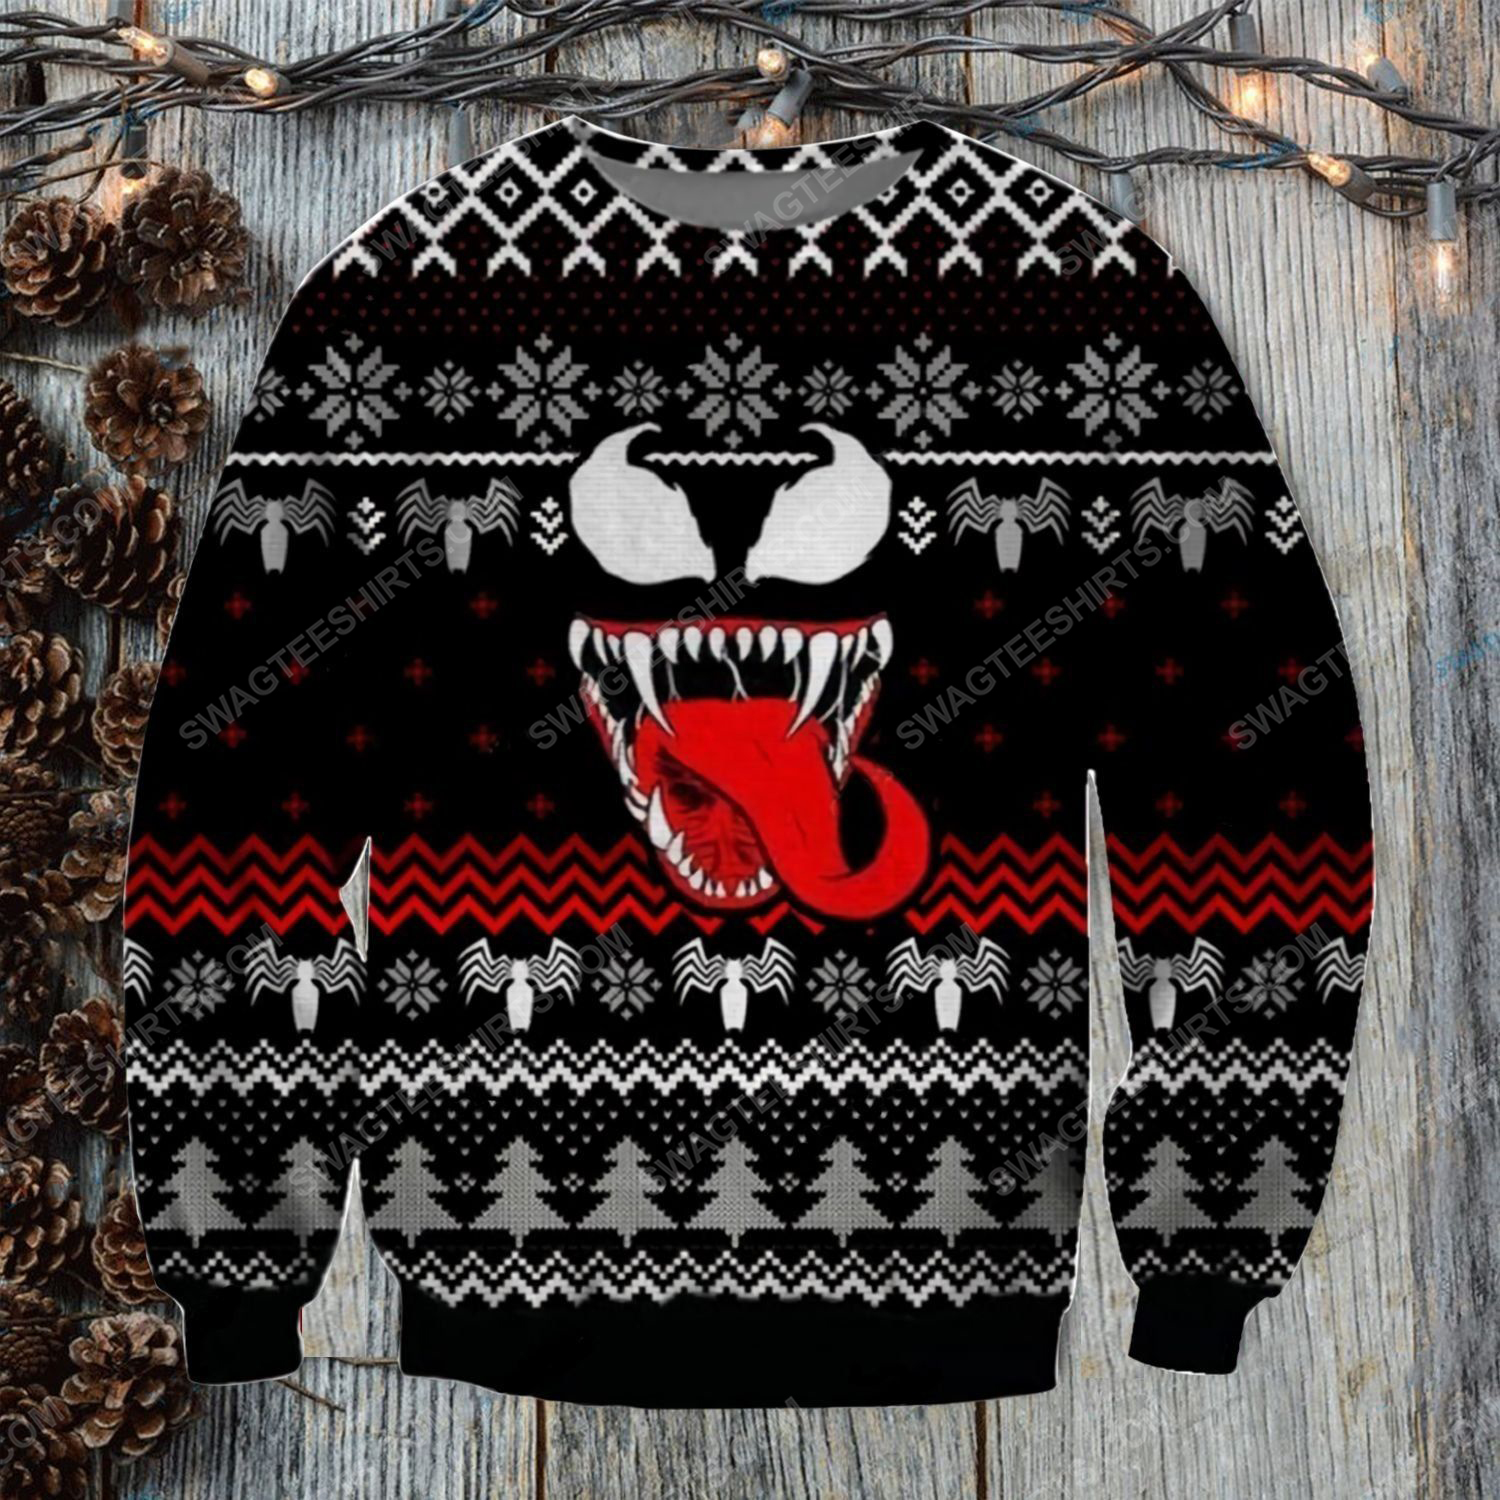 Spider man venom ugly christmas sweater - Copy (2)